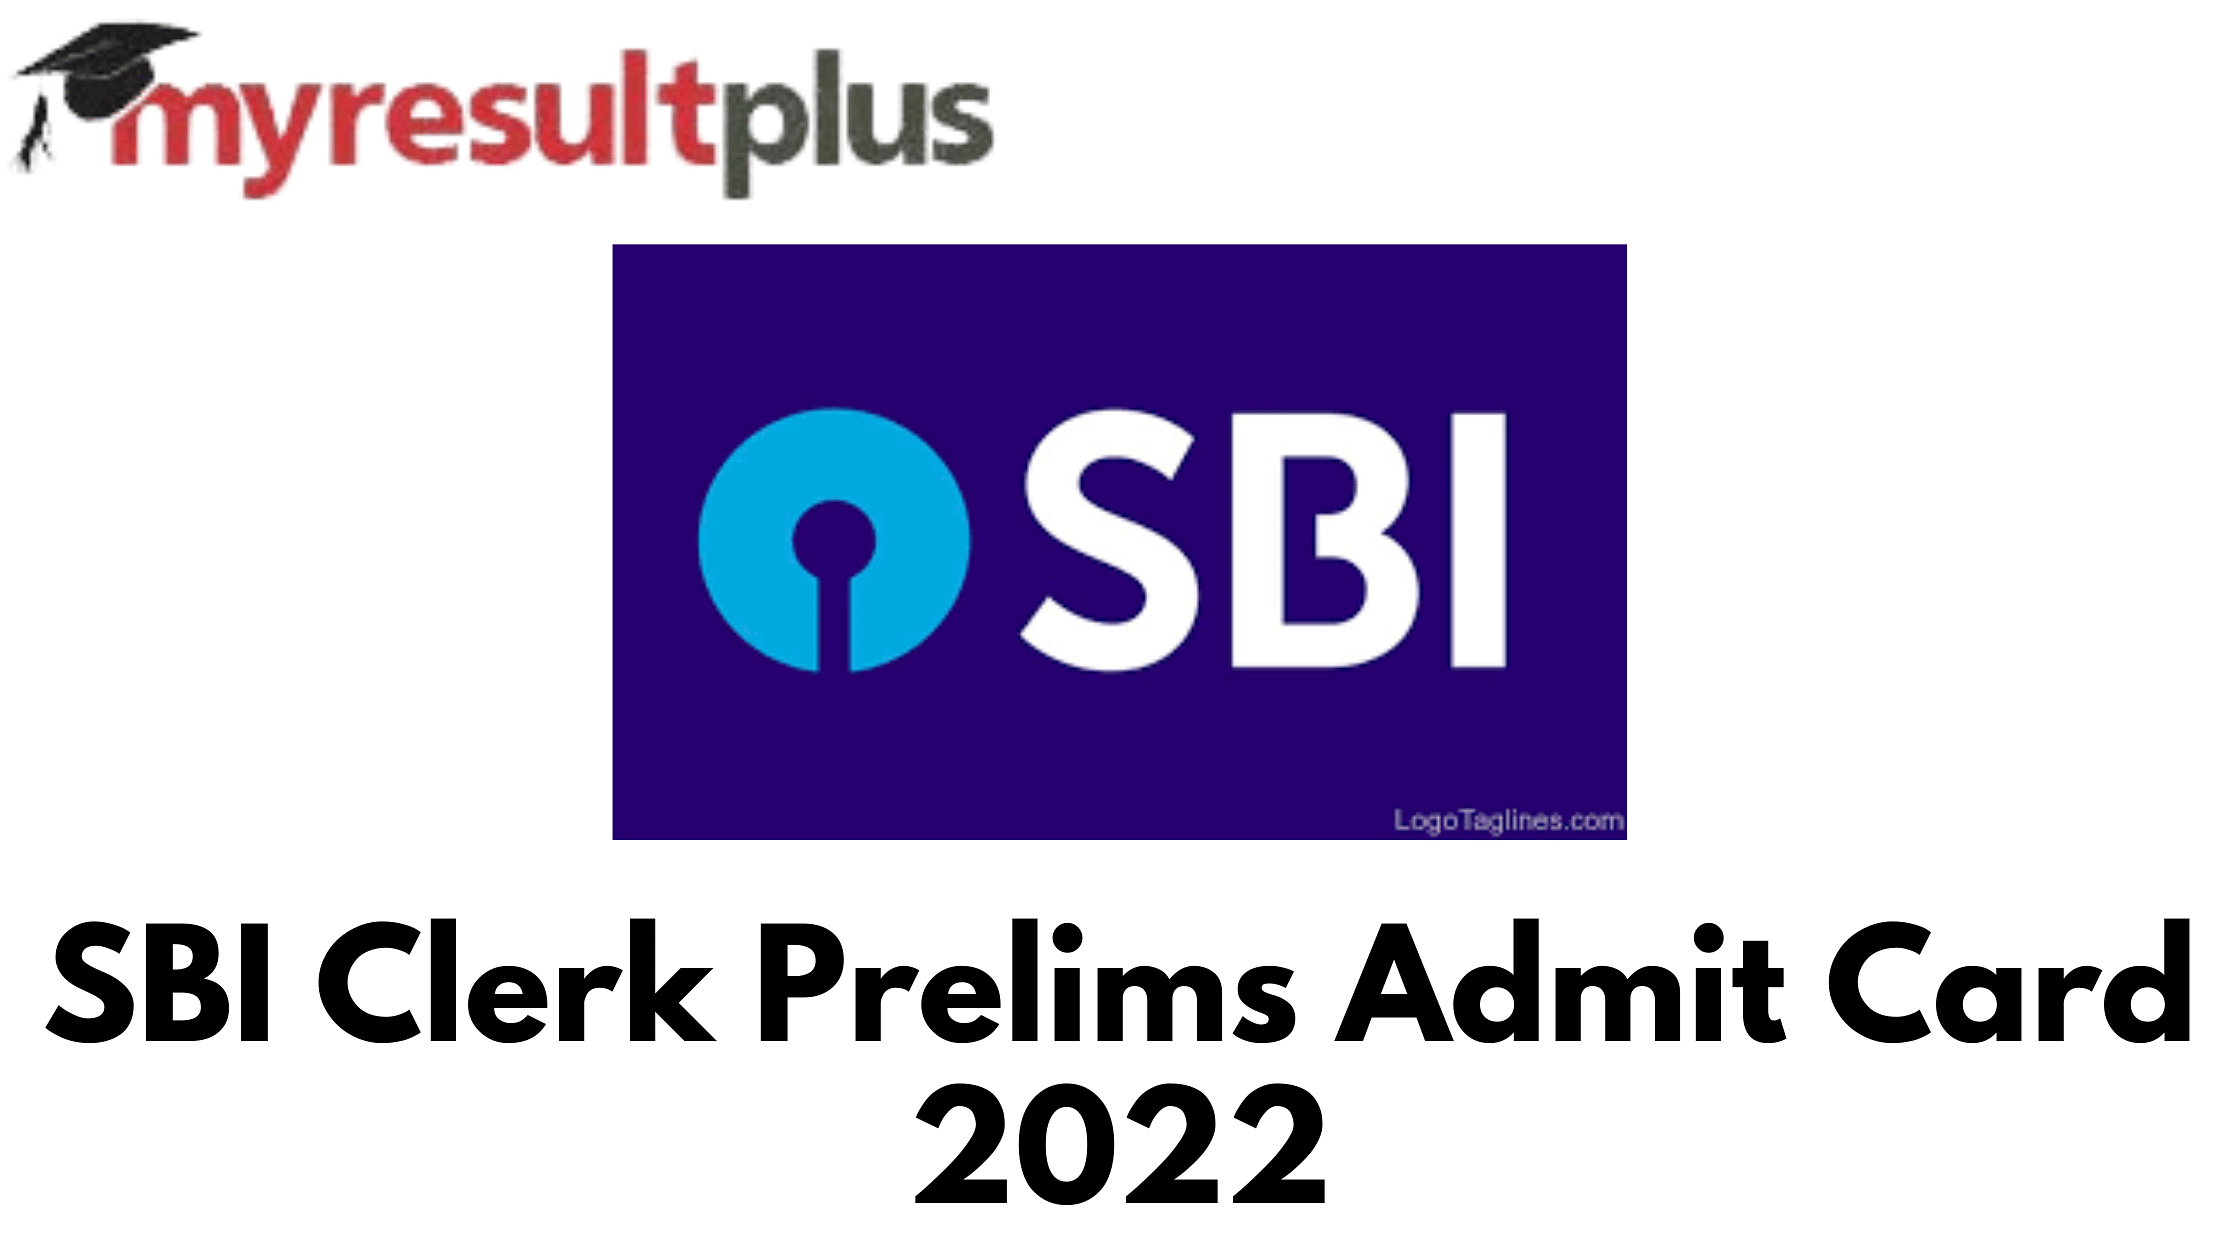 SBI Clerk Recruitment 2022: Admit Card Expected Soon, Prelims Exam in November